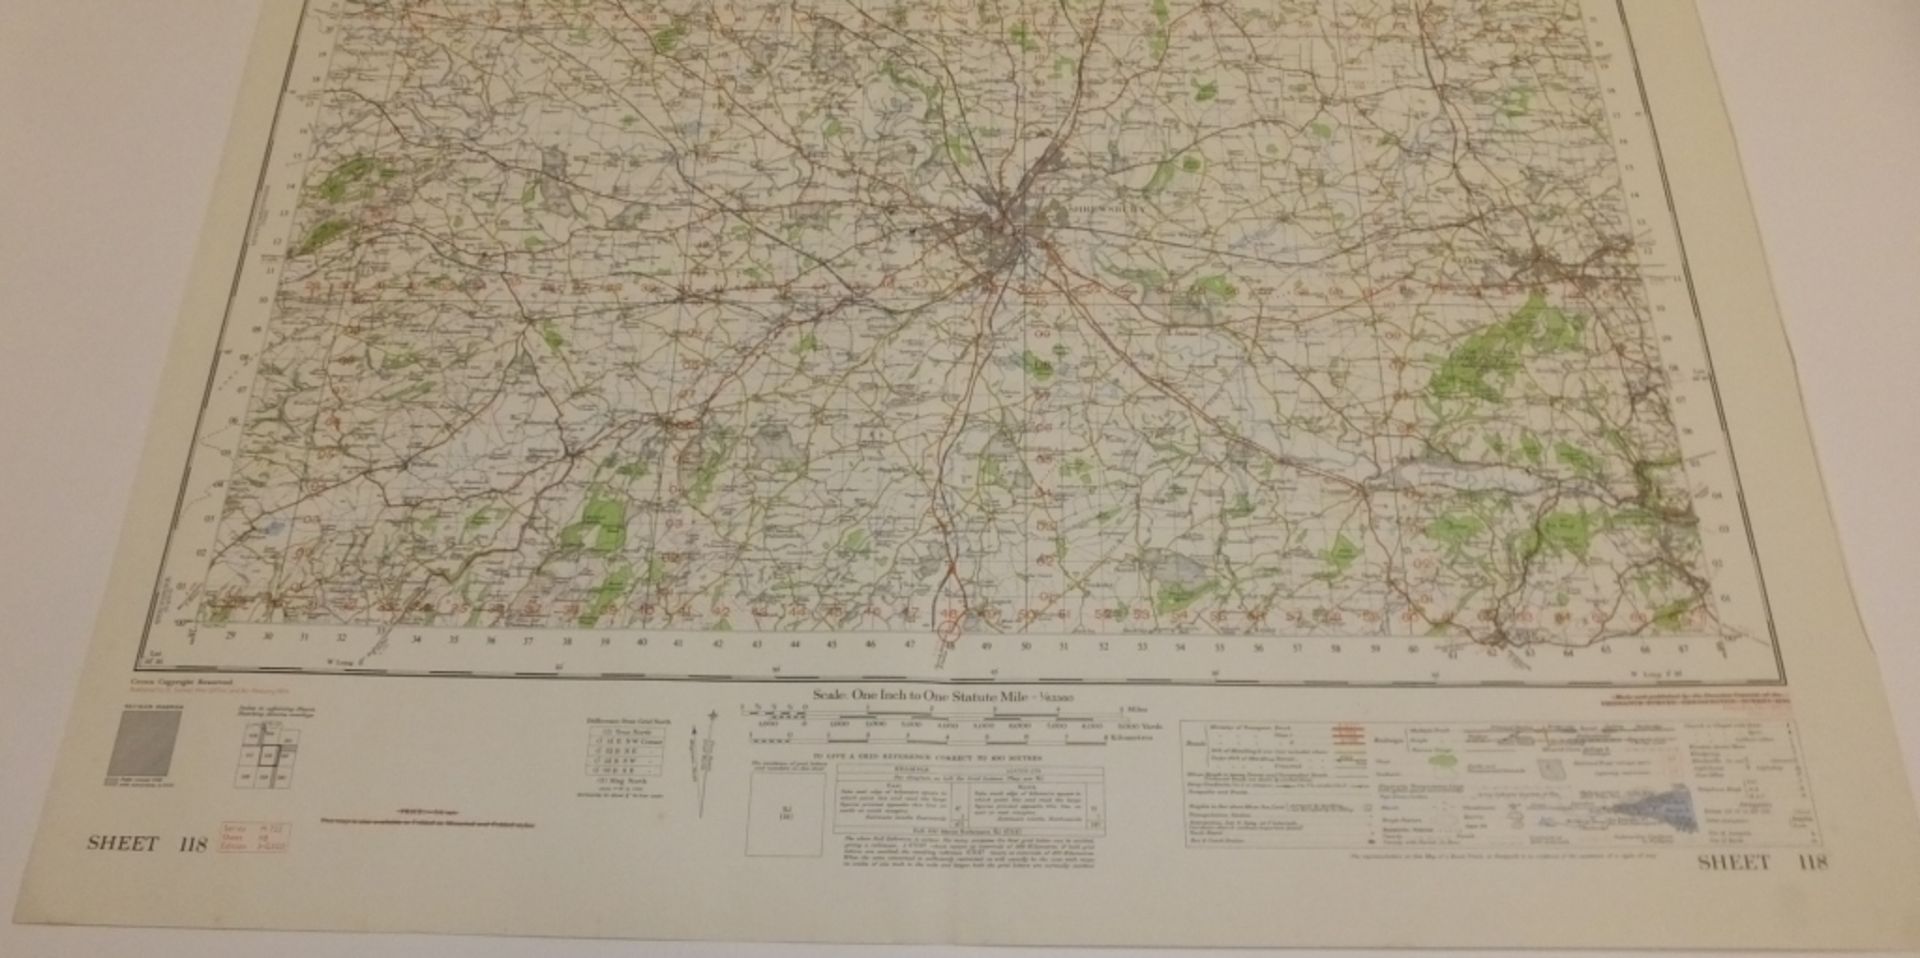 25x ENGLAND & WALES MAP SHREWSBURY 1INCH 1MILE 1954 7TH SERIES 3GSGS SHEET 118 - Bild 5 aus 5